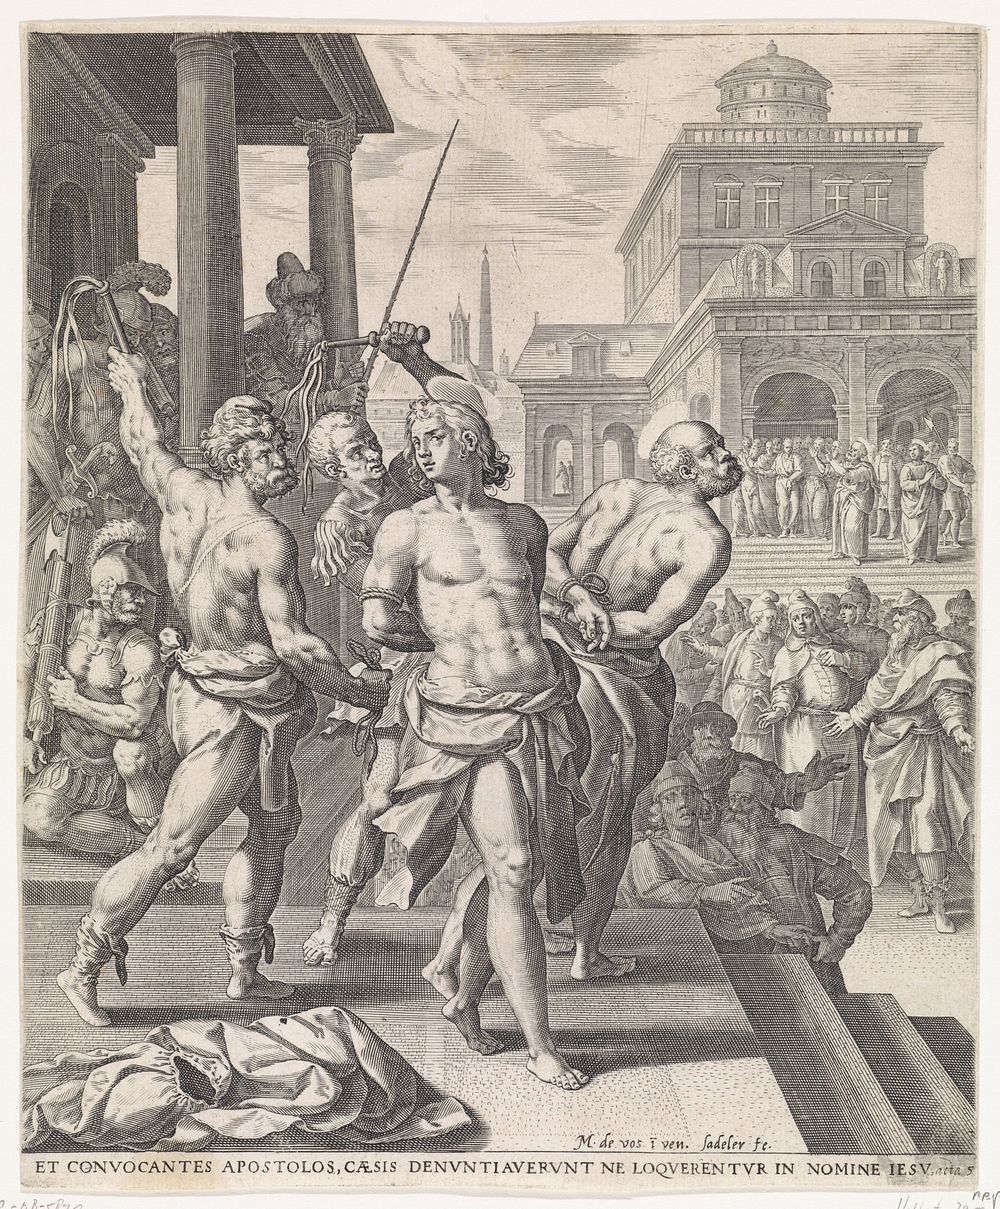 Geseling van de apostelen (1580) by Johann Sadeler I, Maerten de Vos and Johann Sadeler I